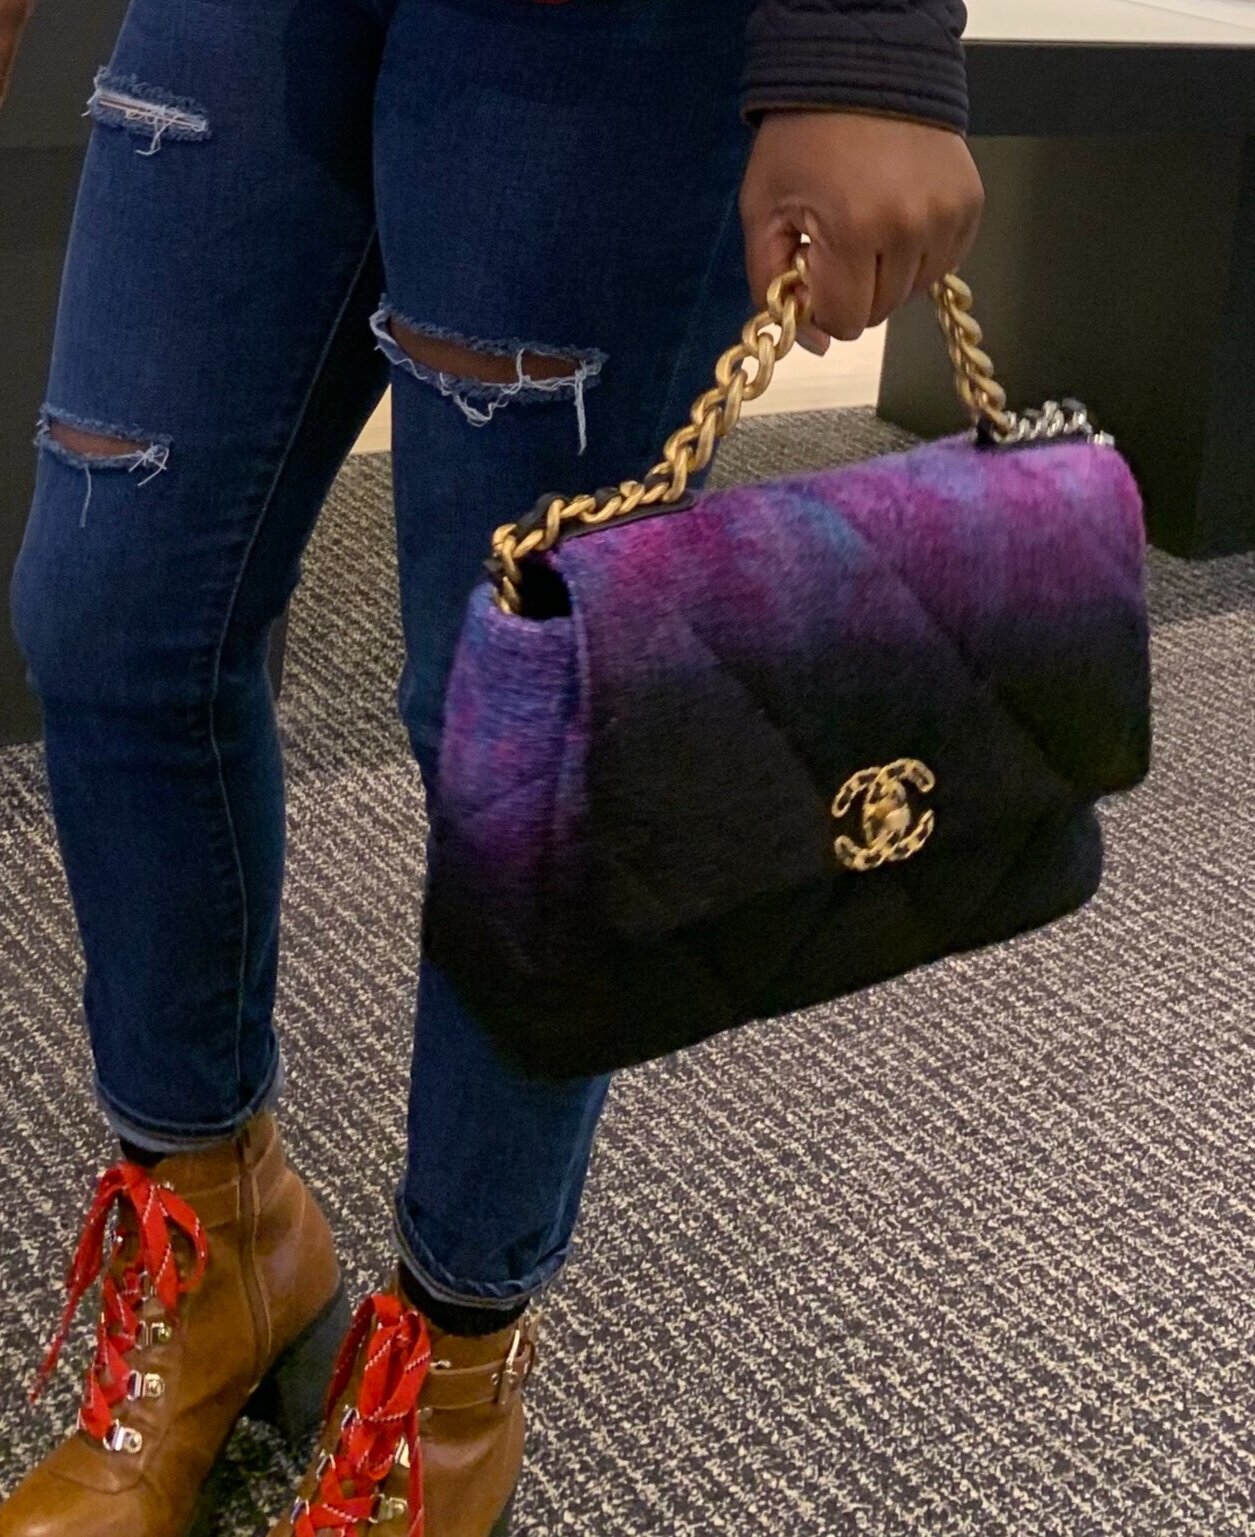 Chanel 19 Flap Bag Tweed Multicolour